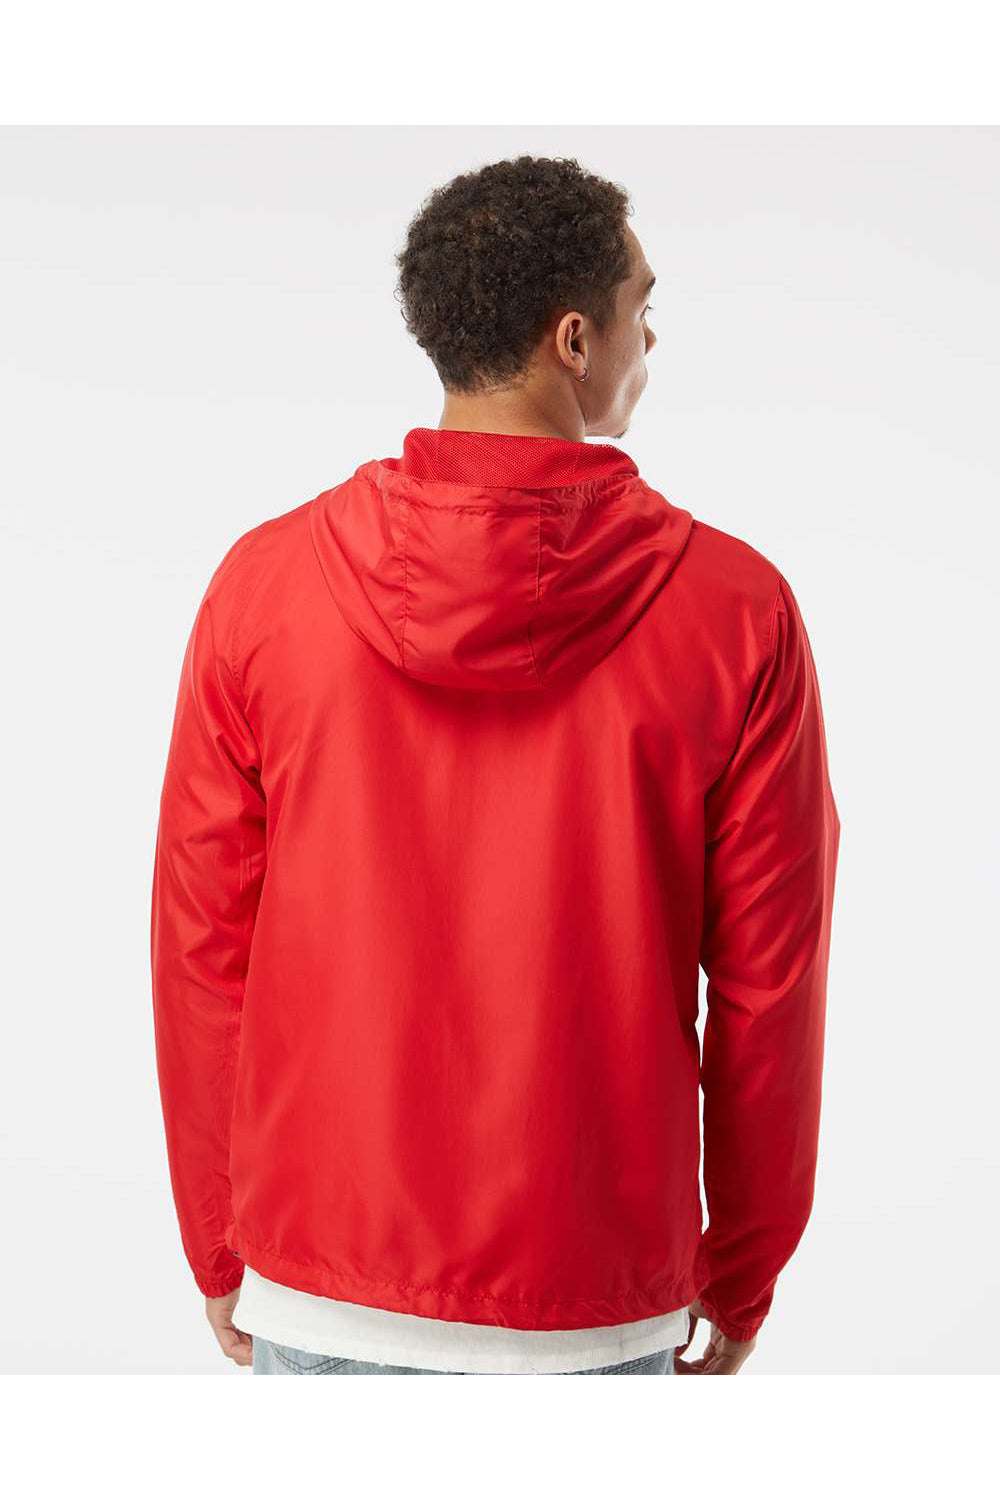 Independent Trading Co. EXP54LWZ Mens Full Zip Windbreaker Hooded Jacket Red Model Back